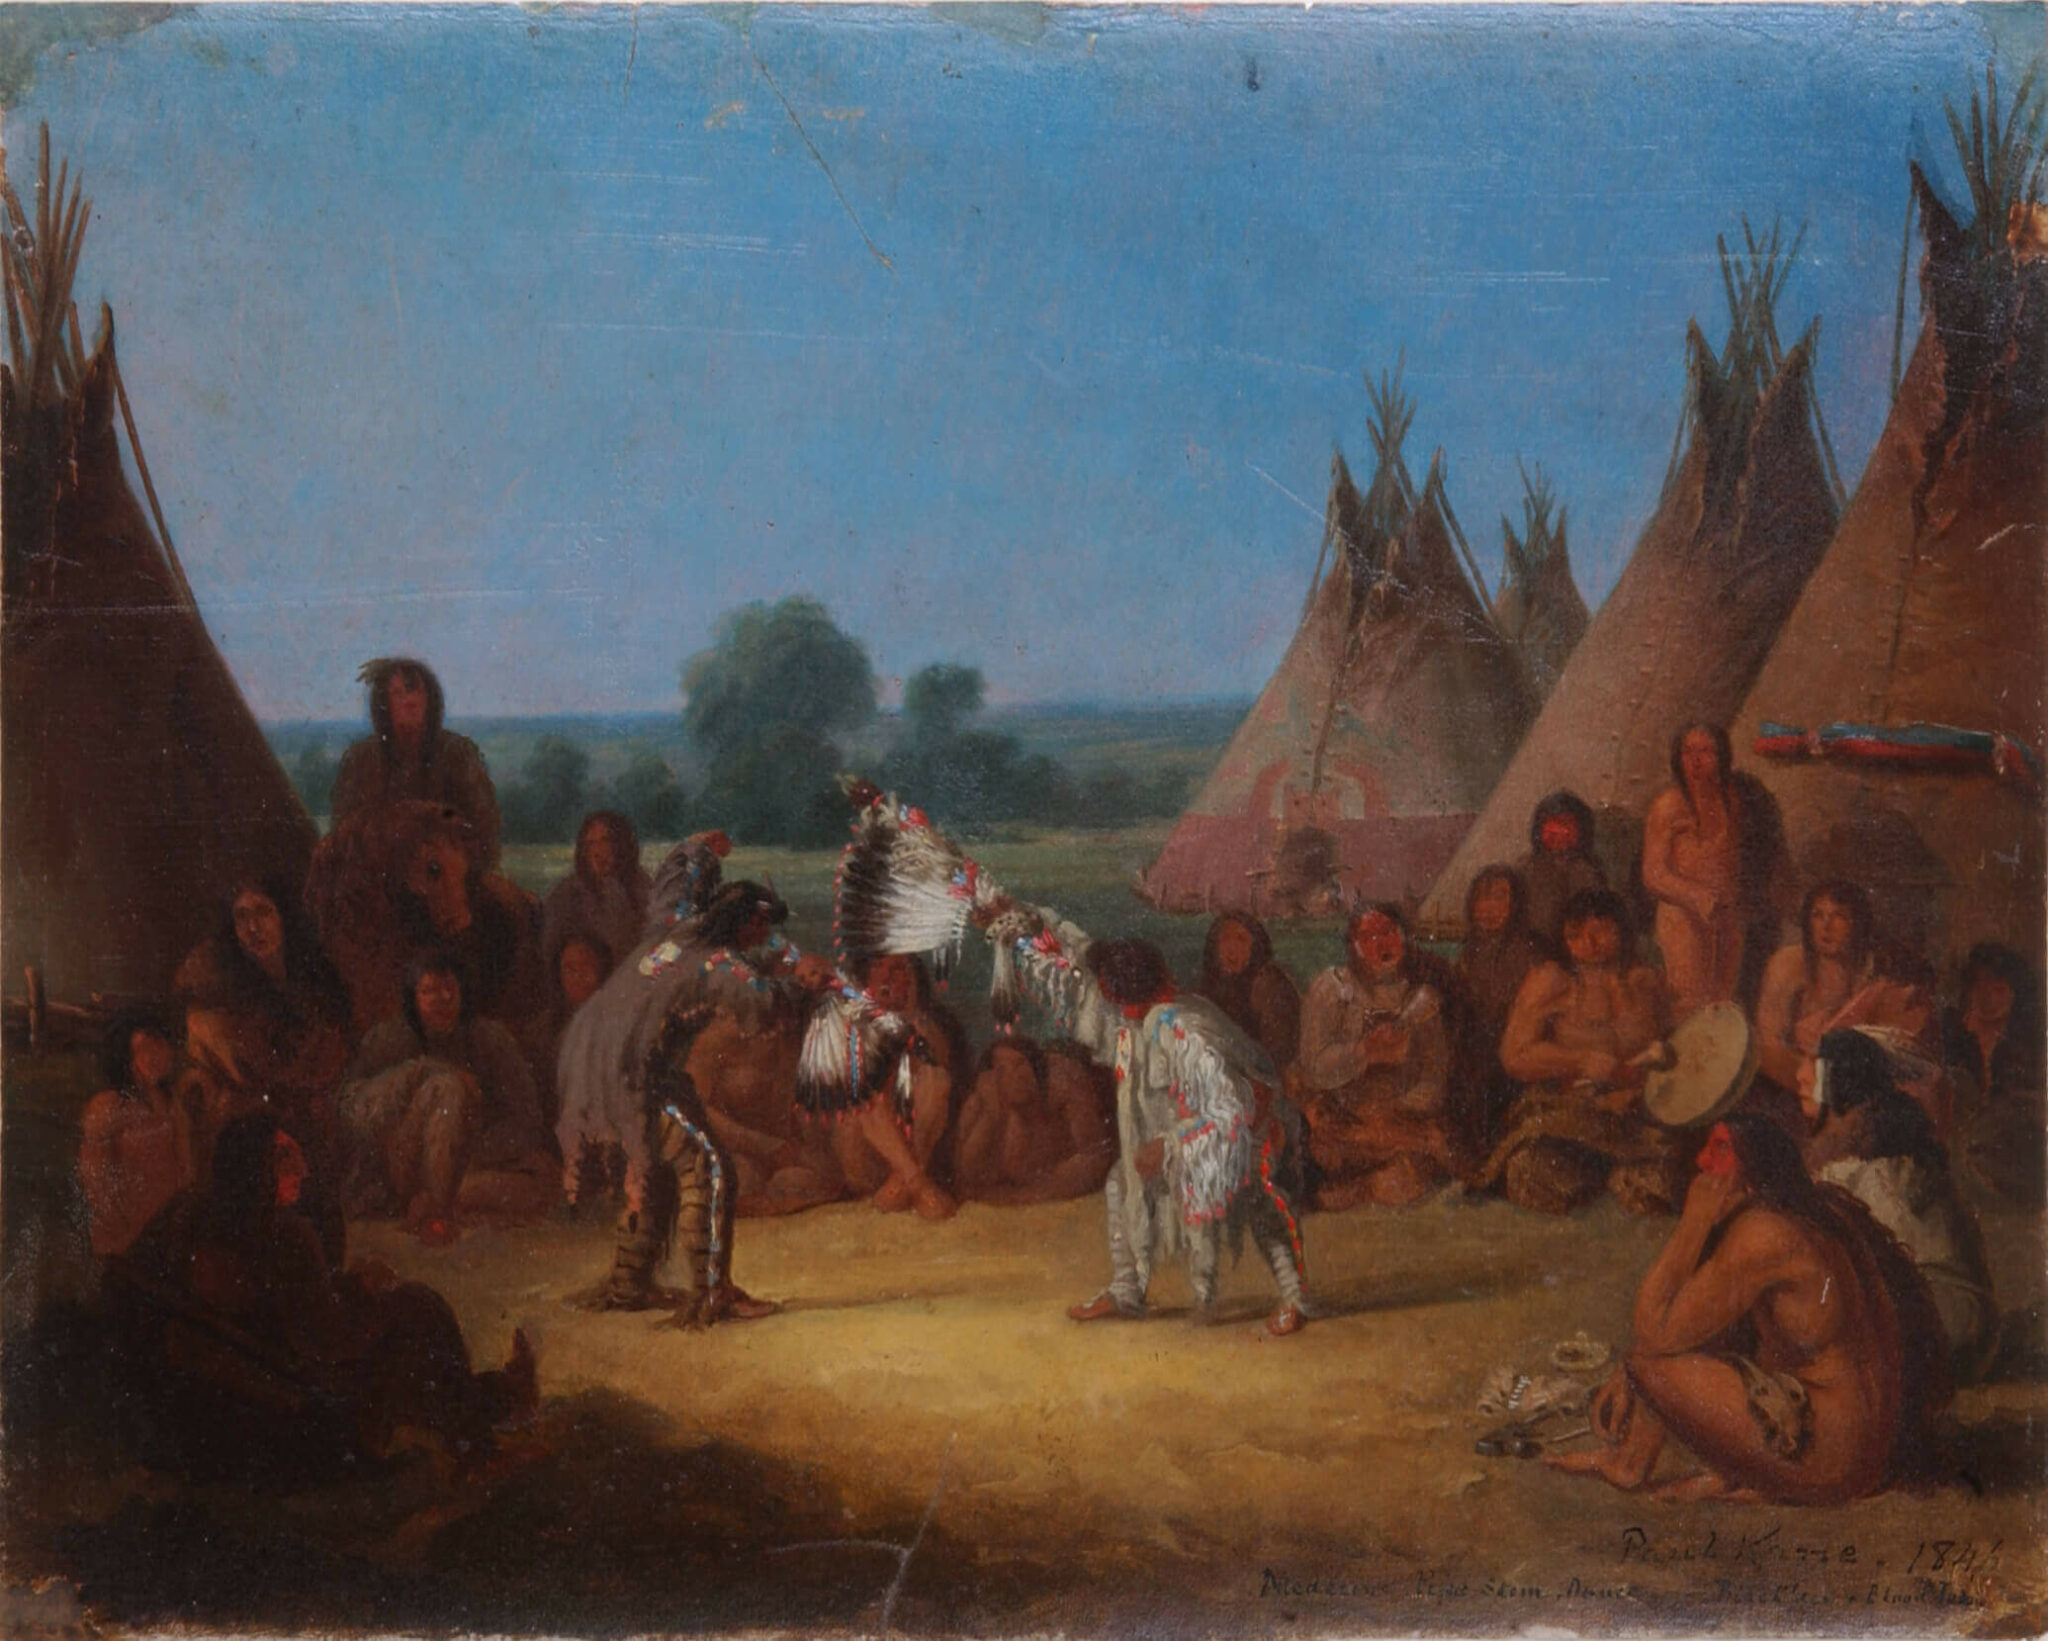 Paul Kane, Danse de la tige de pipe médicinale, 1848